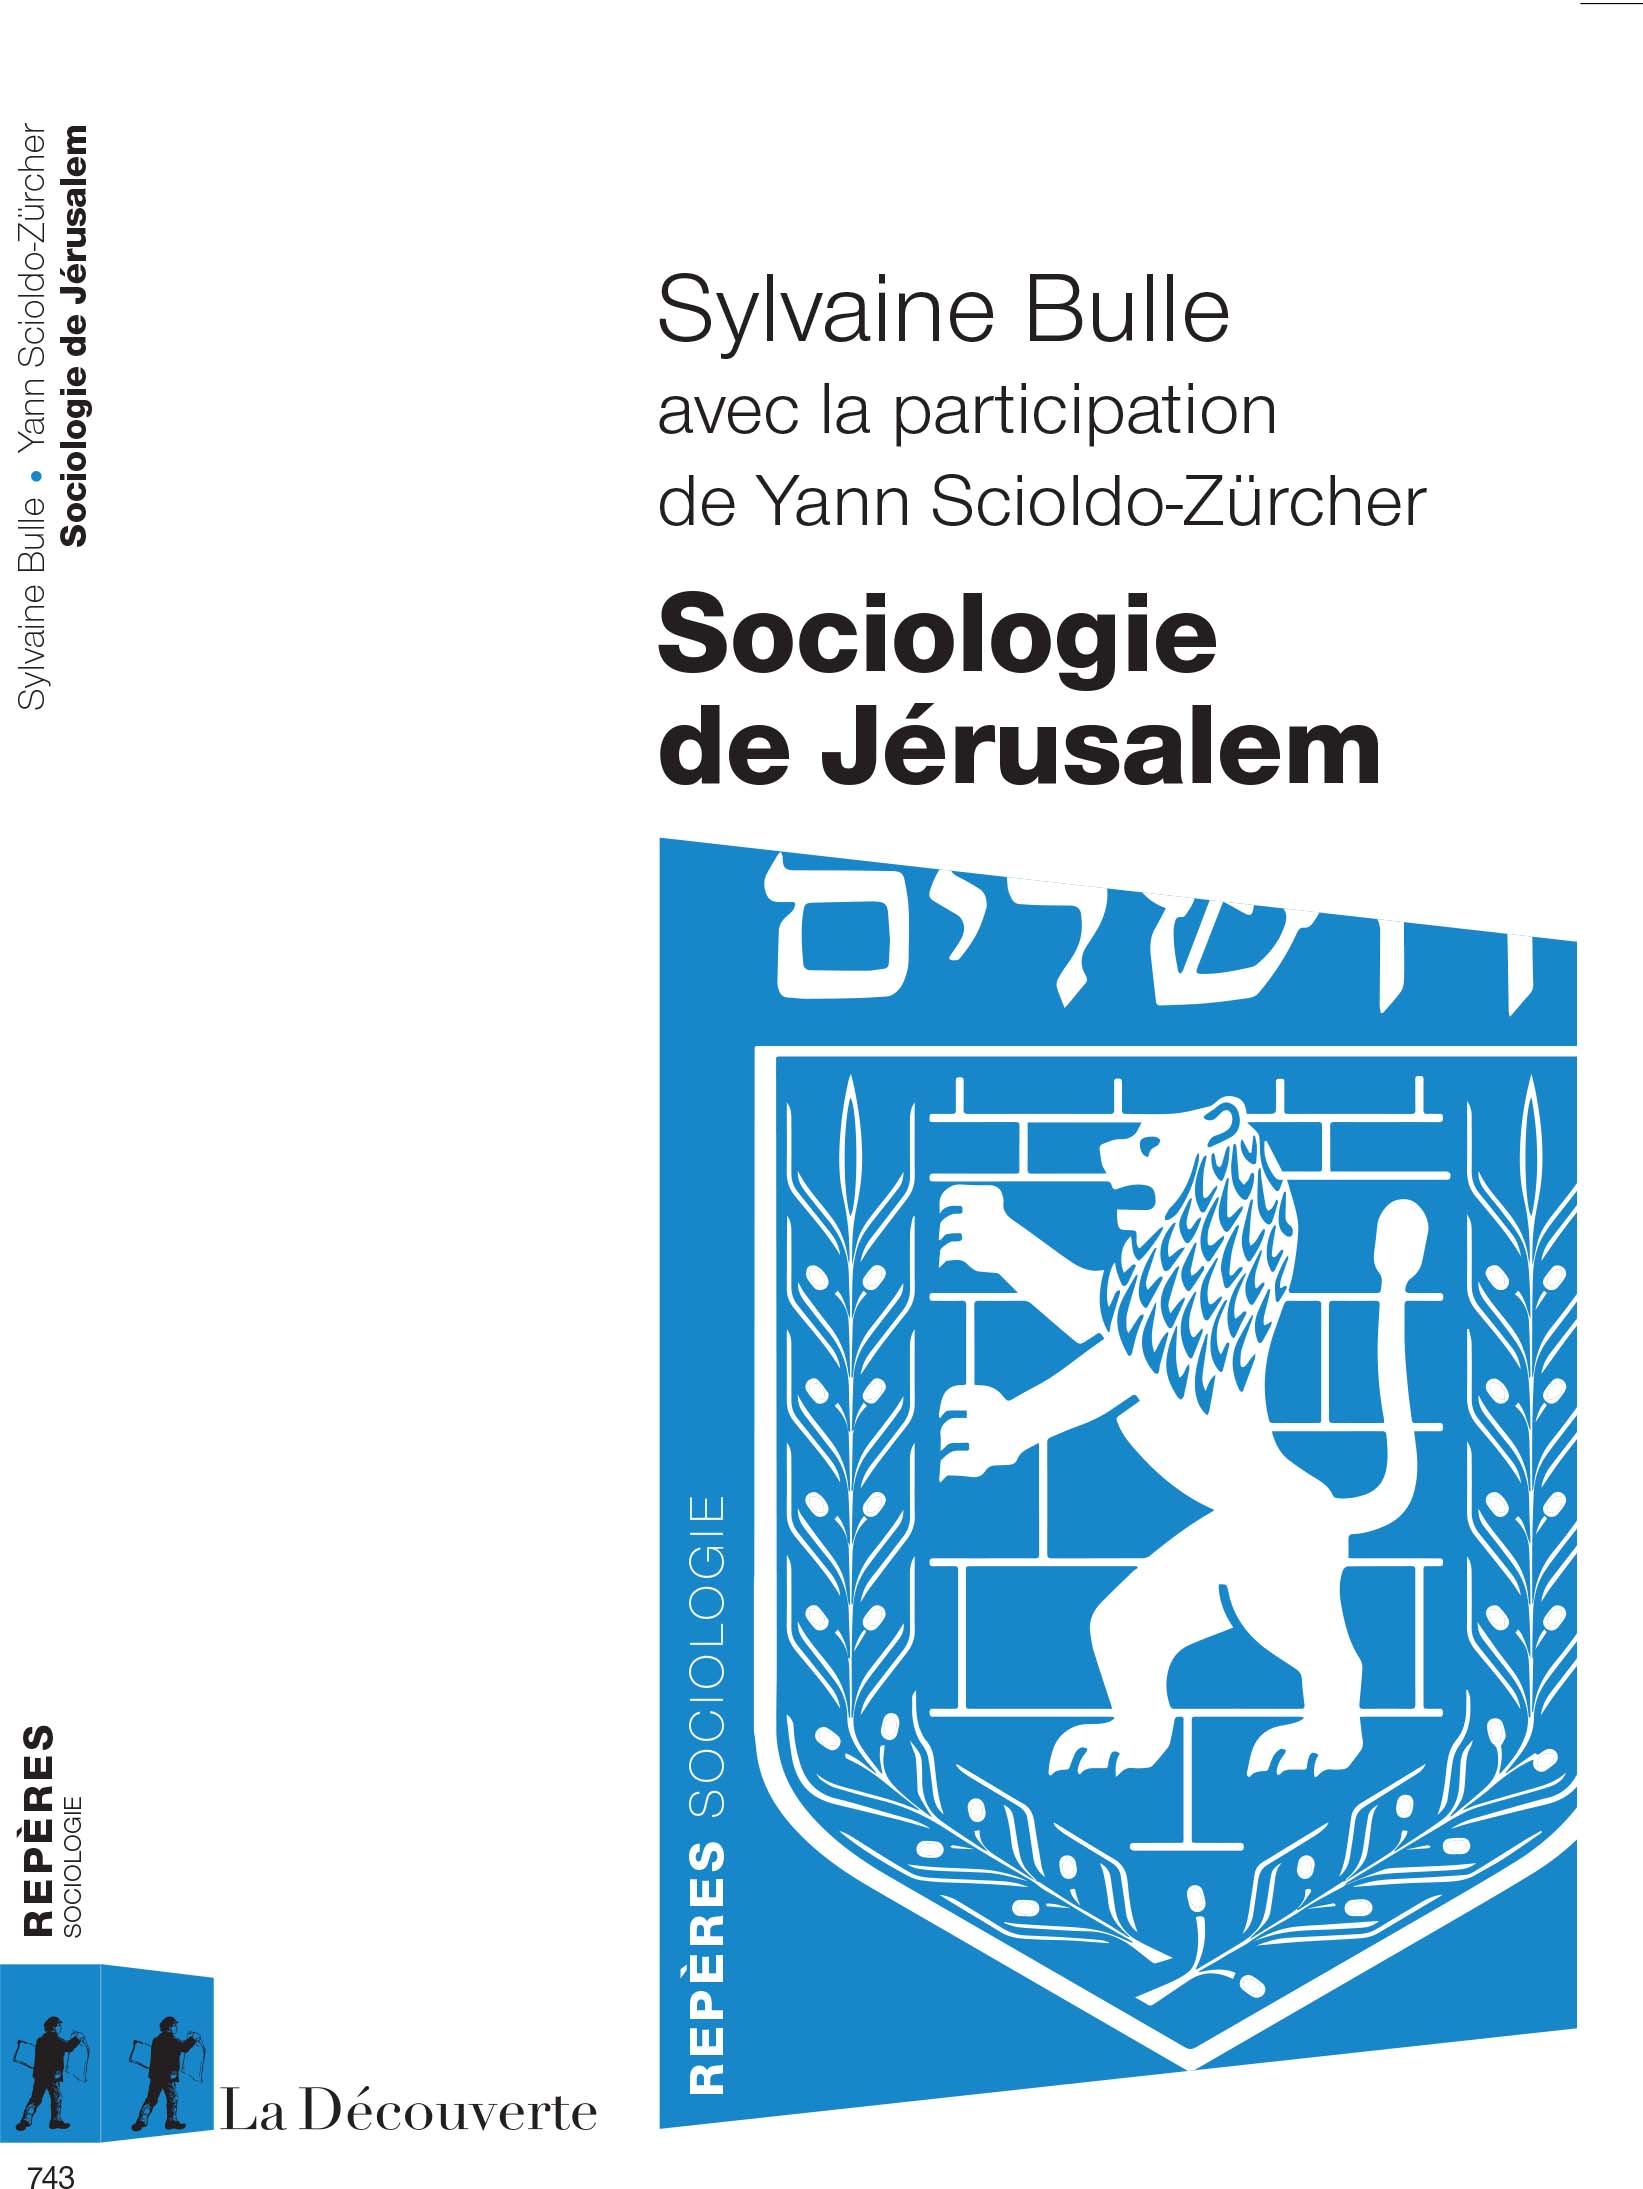 Sociologie de Jérusalem